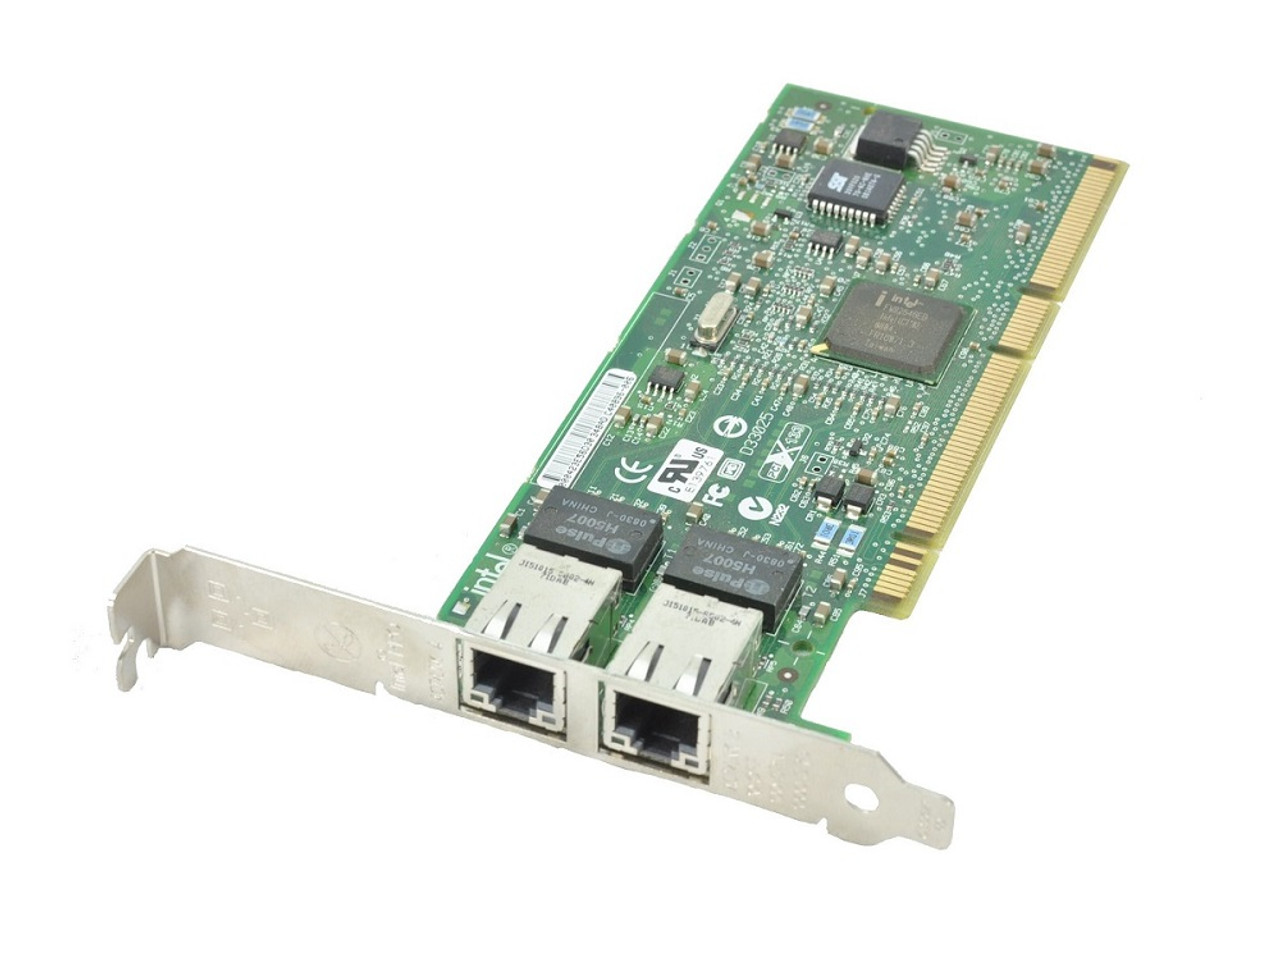 PJ833 - Dell LightPulse 2GB 1P Fibre PCI-x